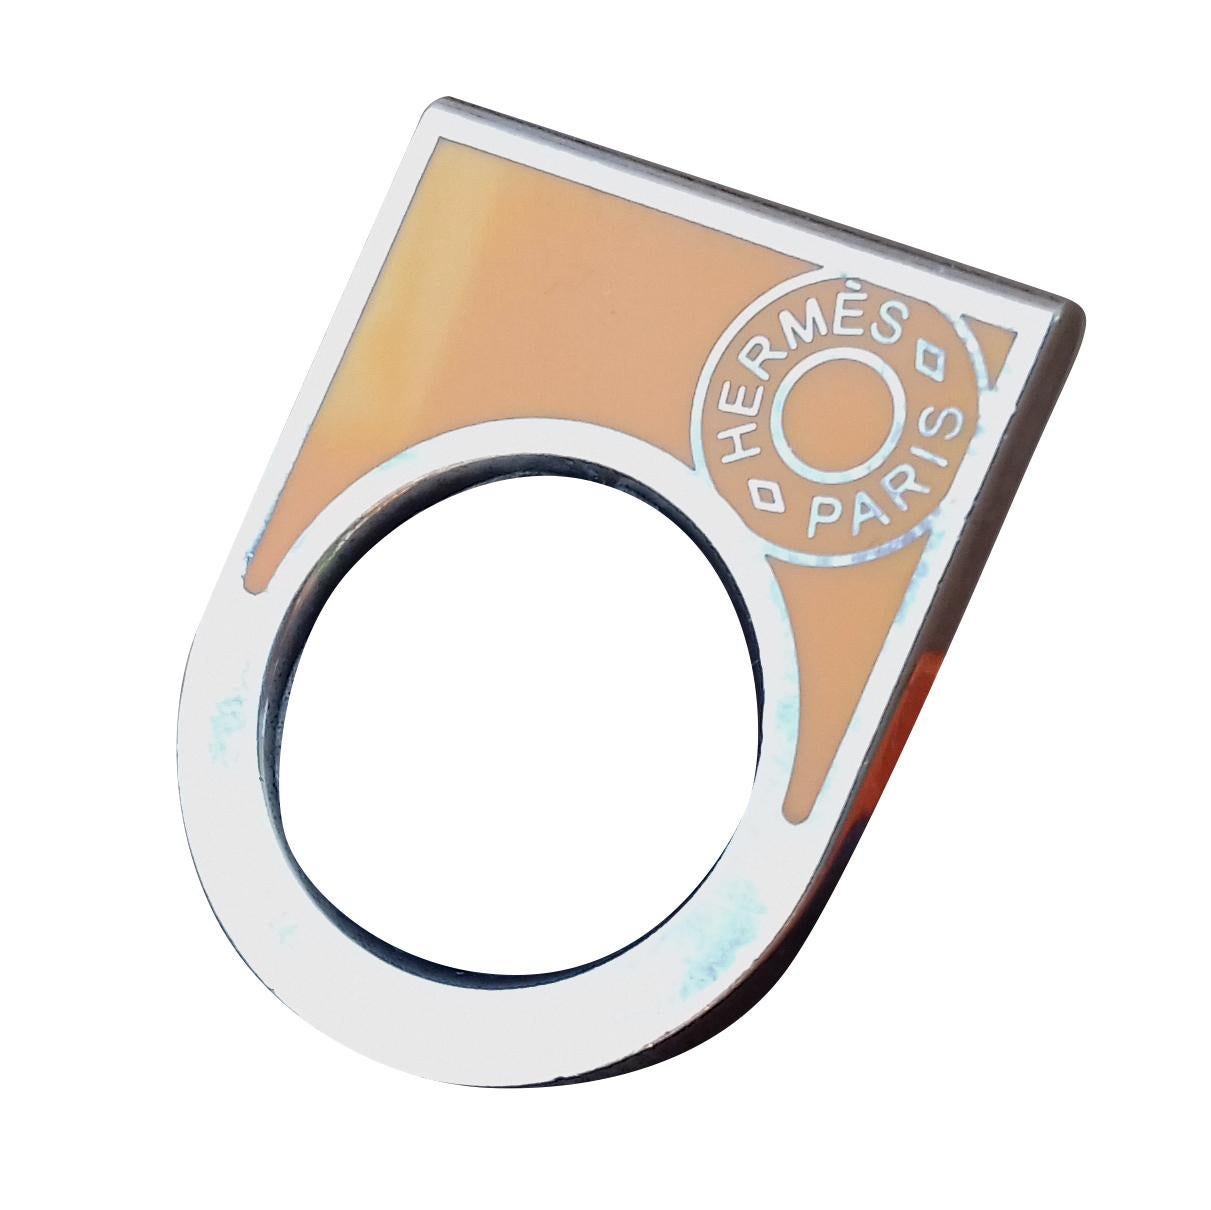 Hermès Ring Clou de selle Anhänger Charme Schal Ring Emaille Silber Größe 49 in Box im Angebot